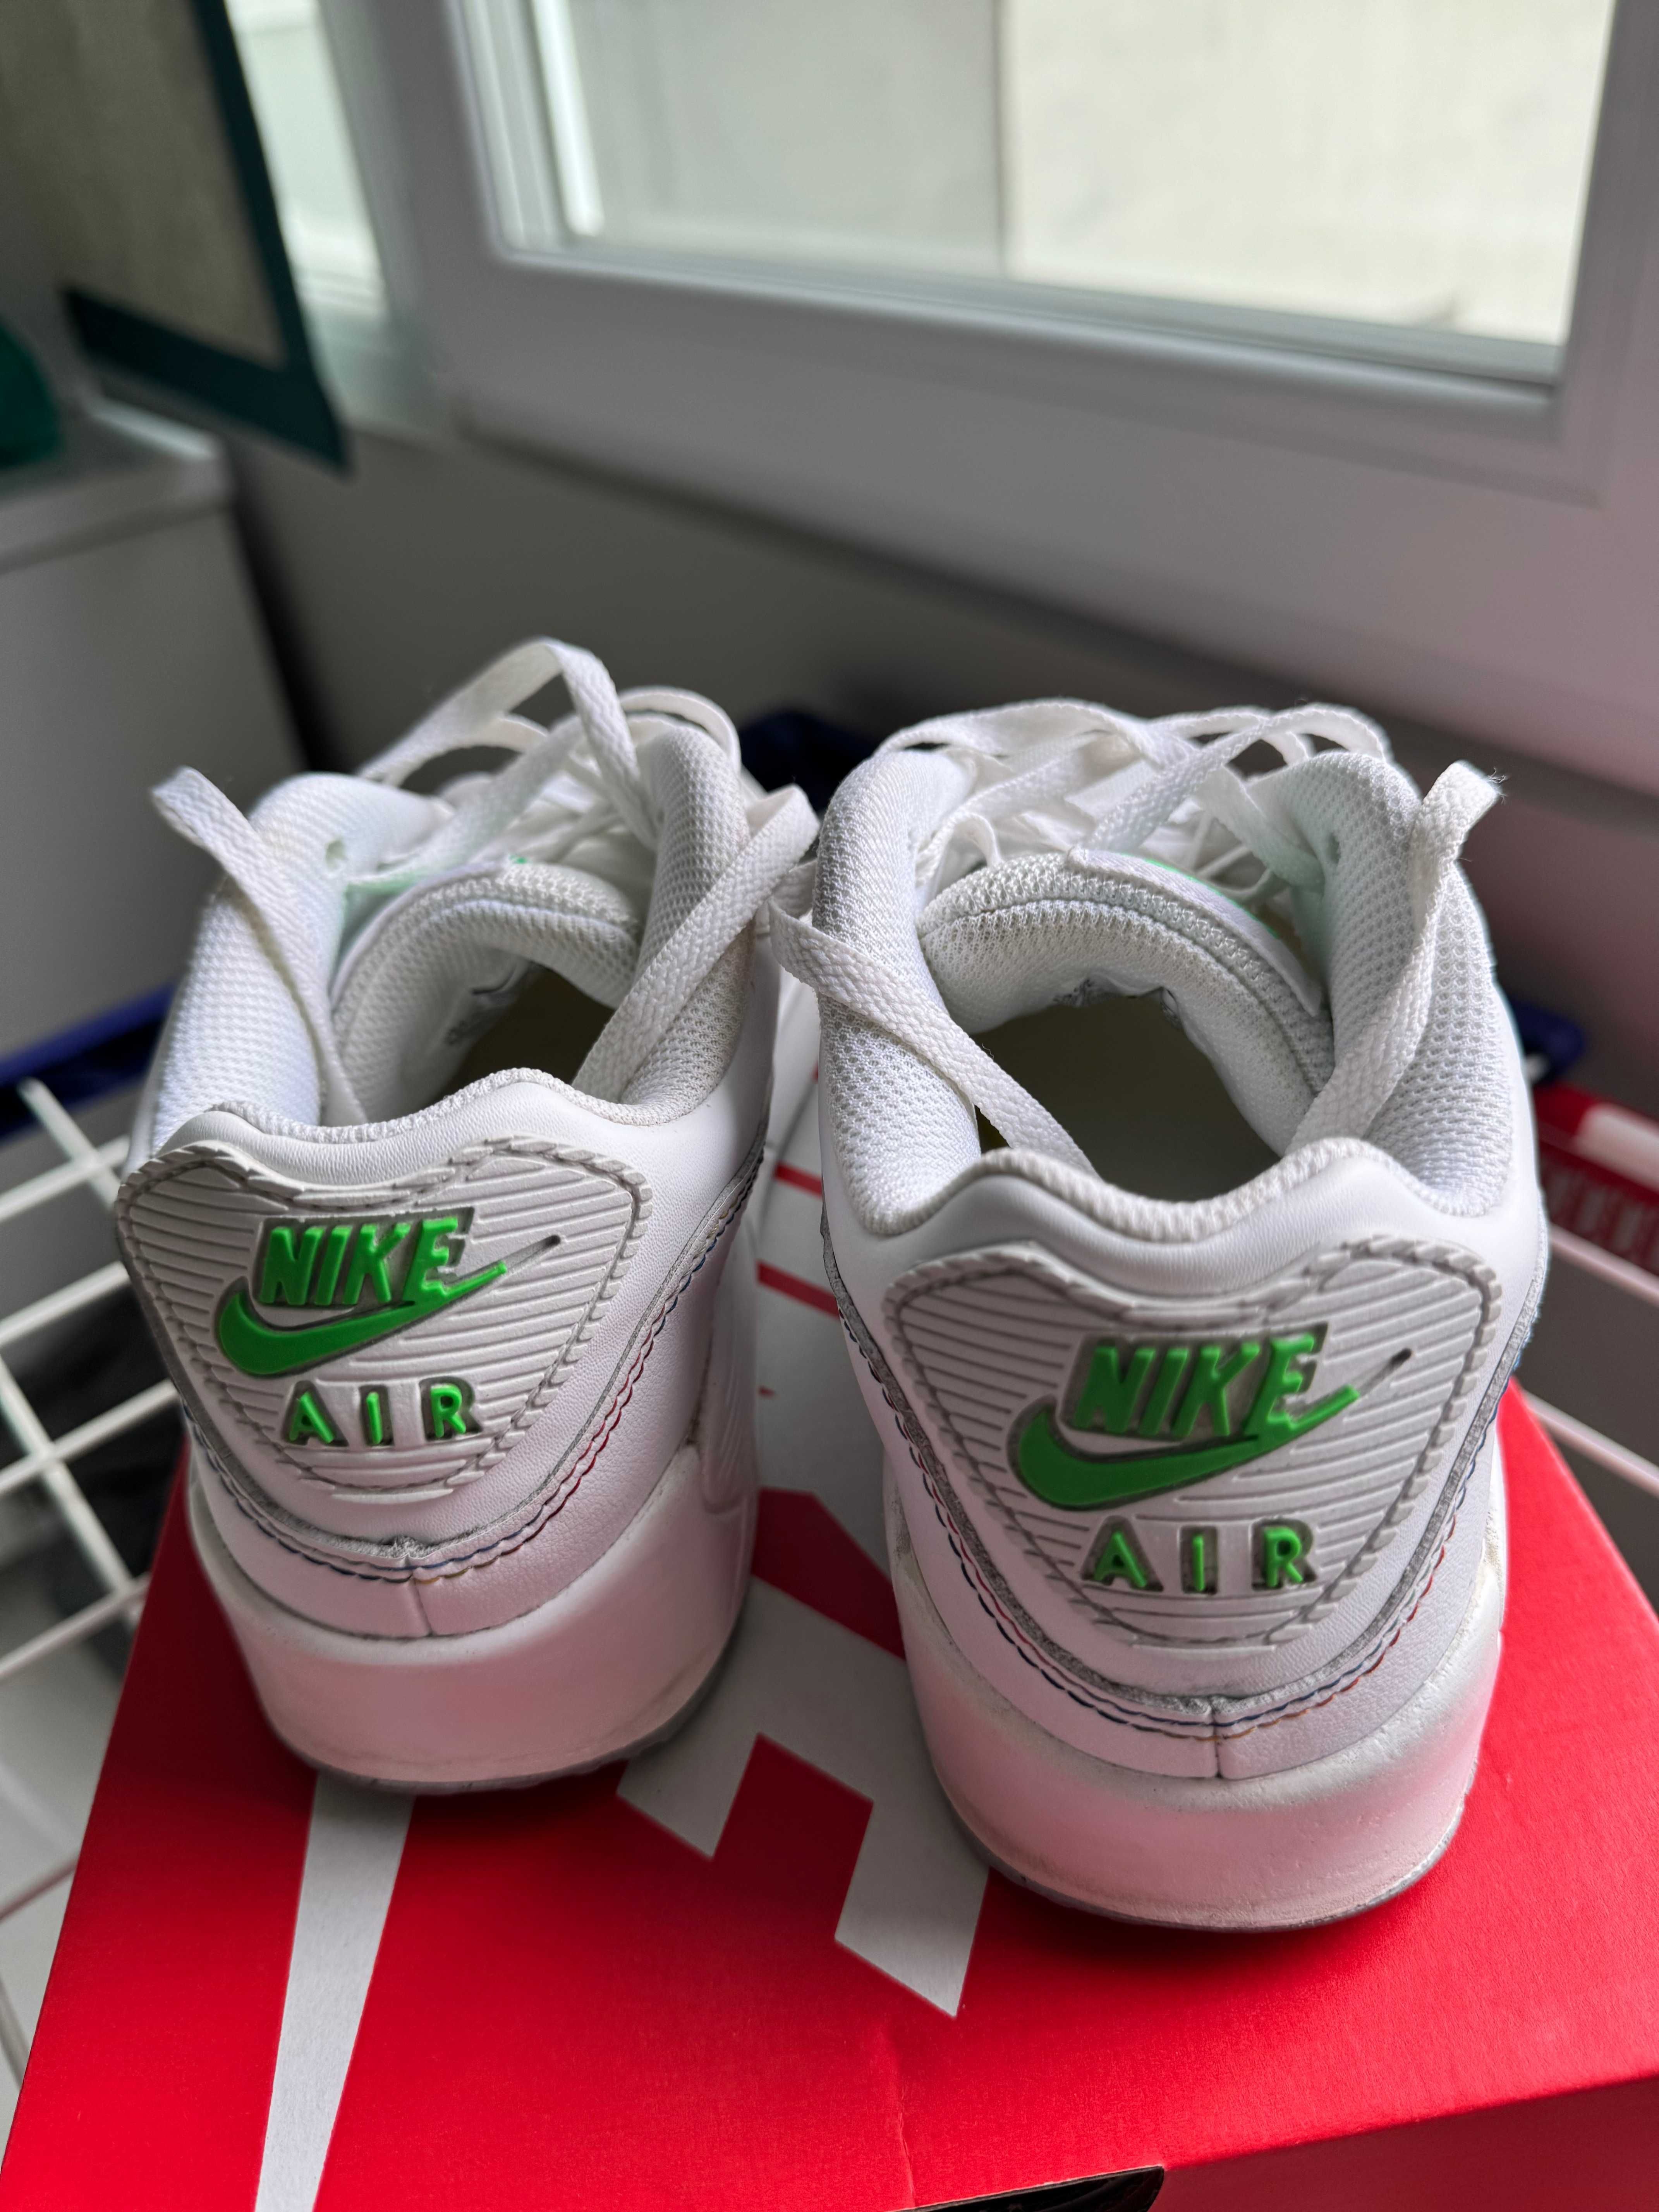 Nike Air Max dama, numarul 36.5, purtati de cateva ori